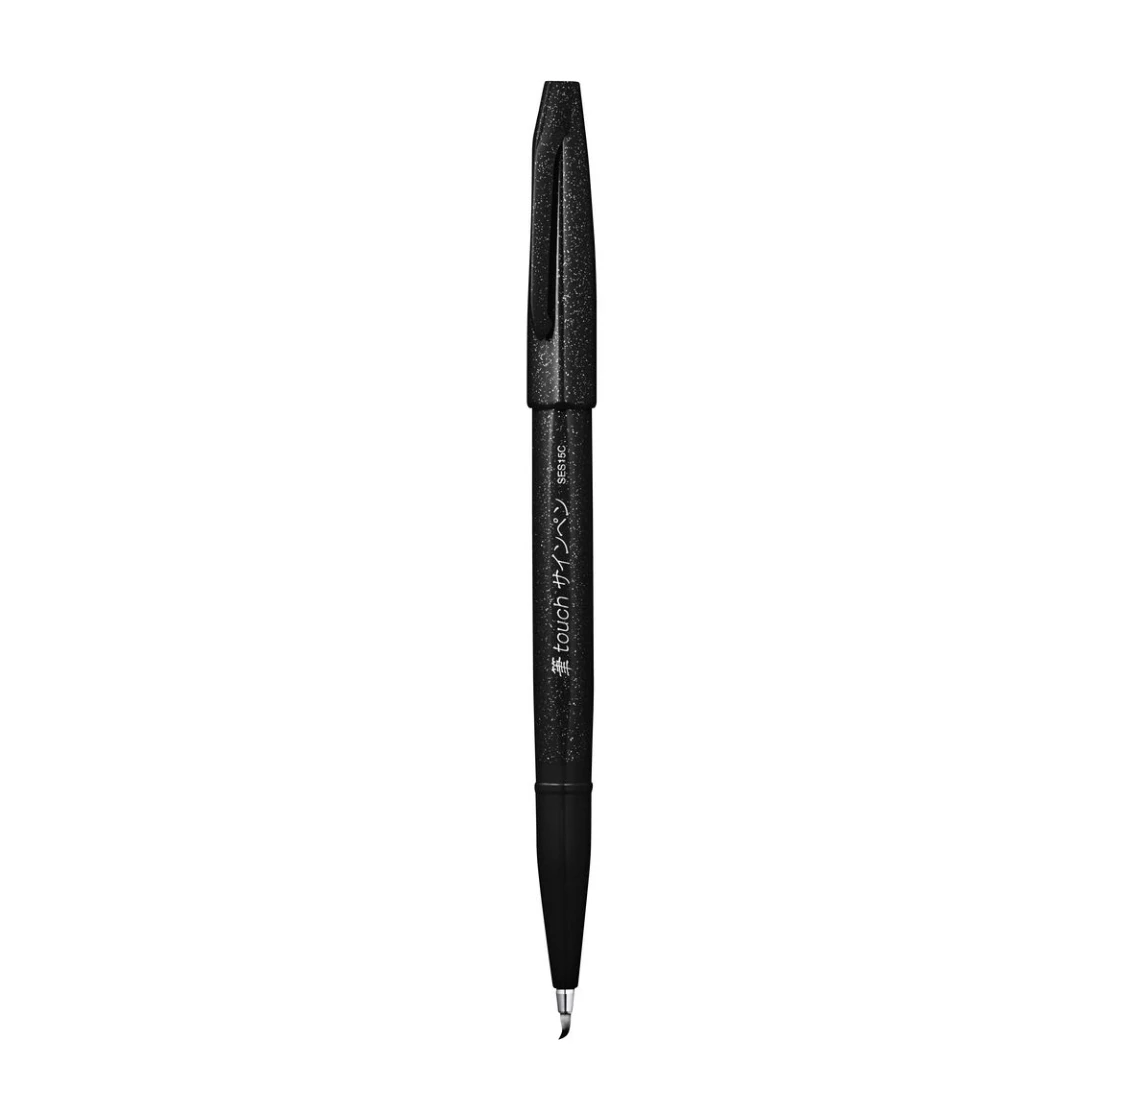 Pentel Fude Touch Brush Sign Pen - Black - Japanese Kawaii Pen